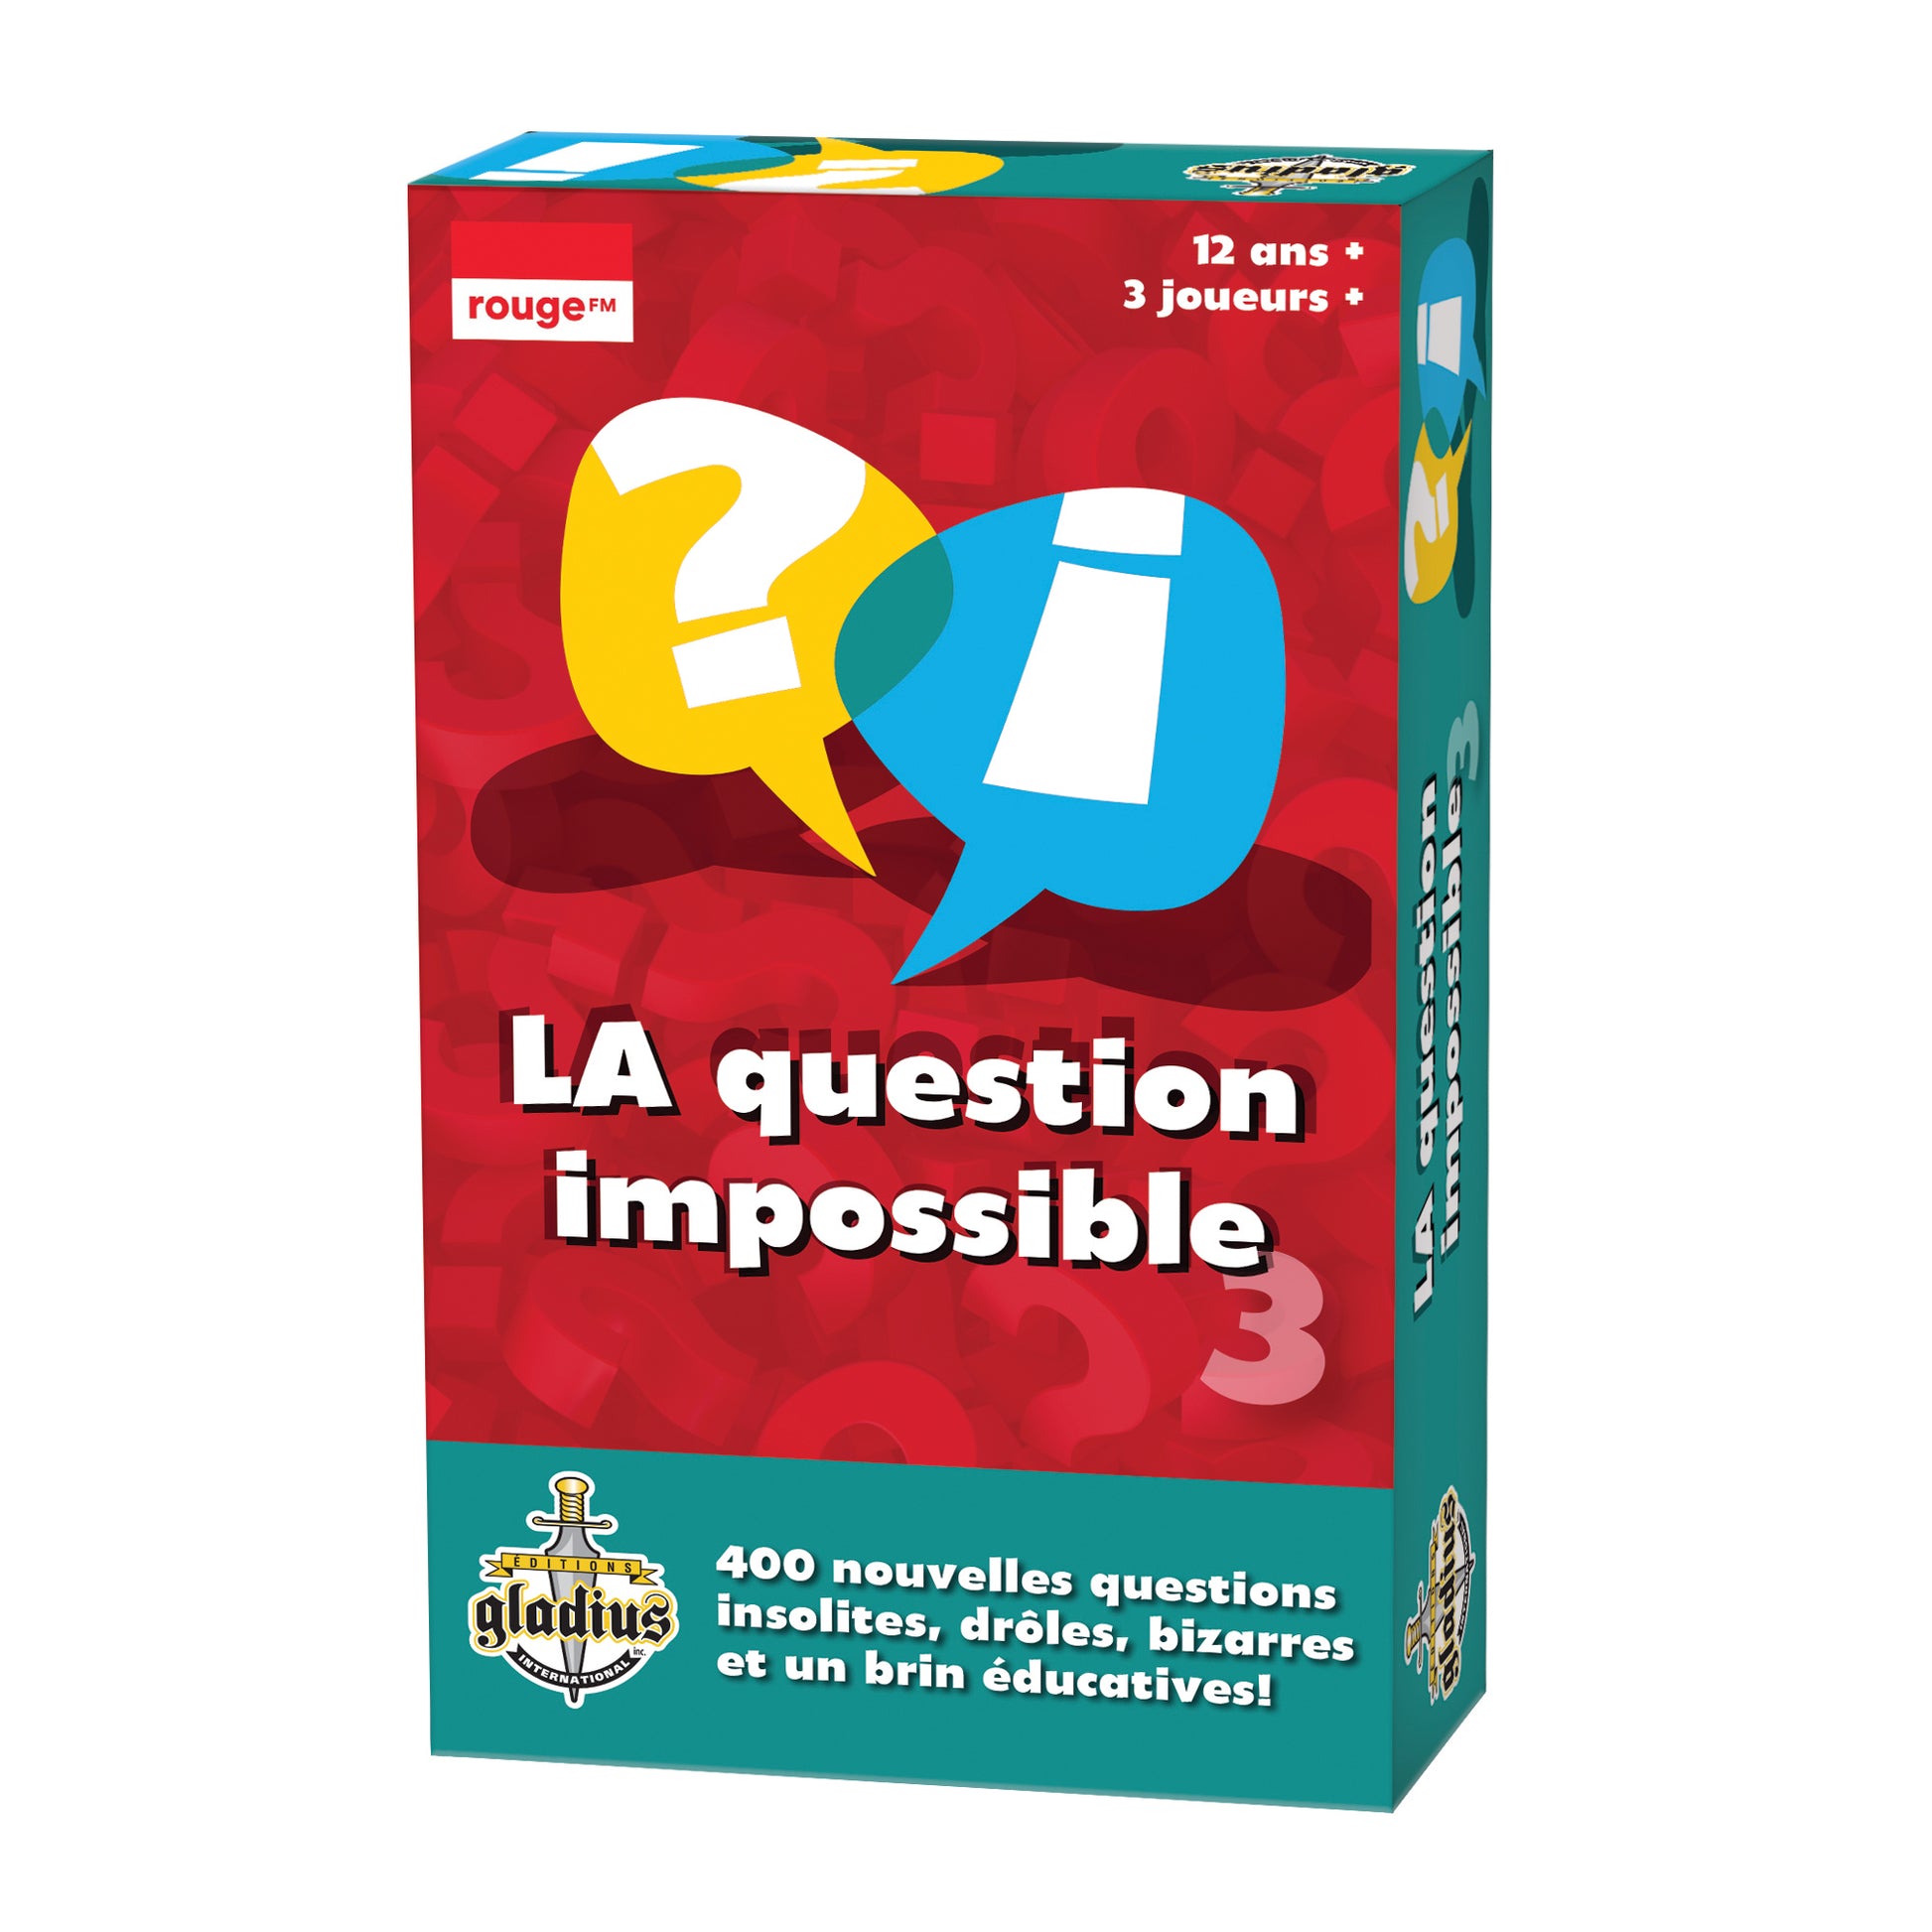 LA Question Impossible Vol 3